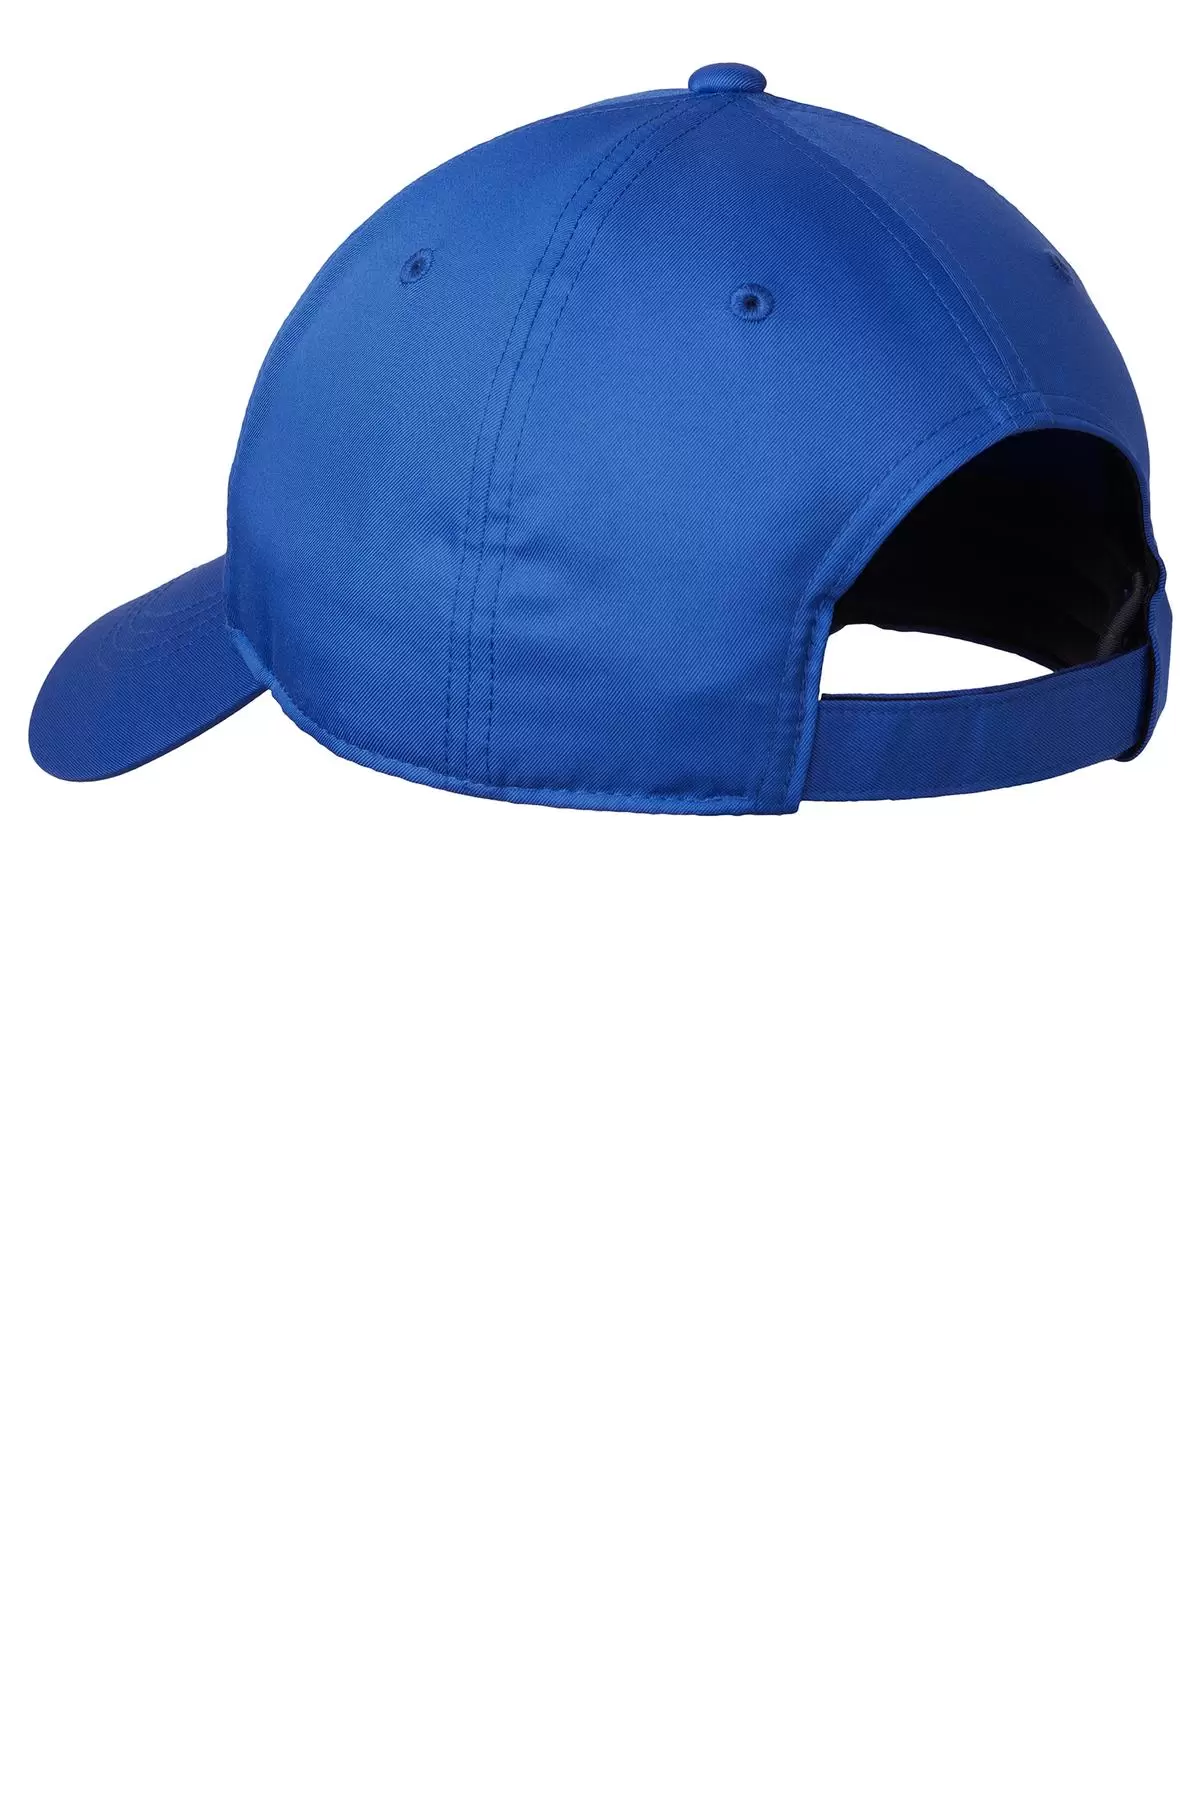 NIKE Dri-Fit Swoosh Front Hat Mens Adjustable Cap 548533 - Various Colors